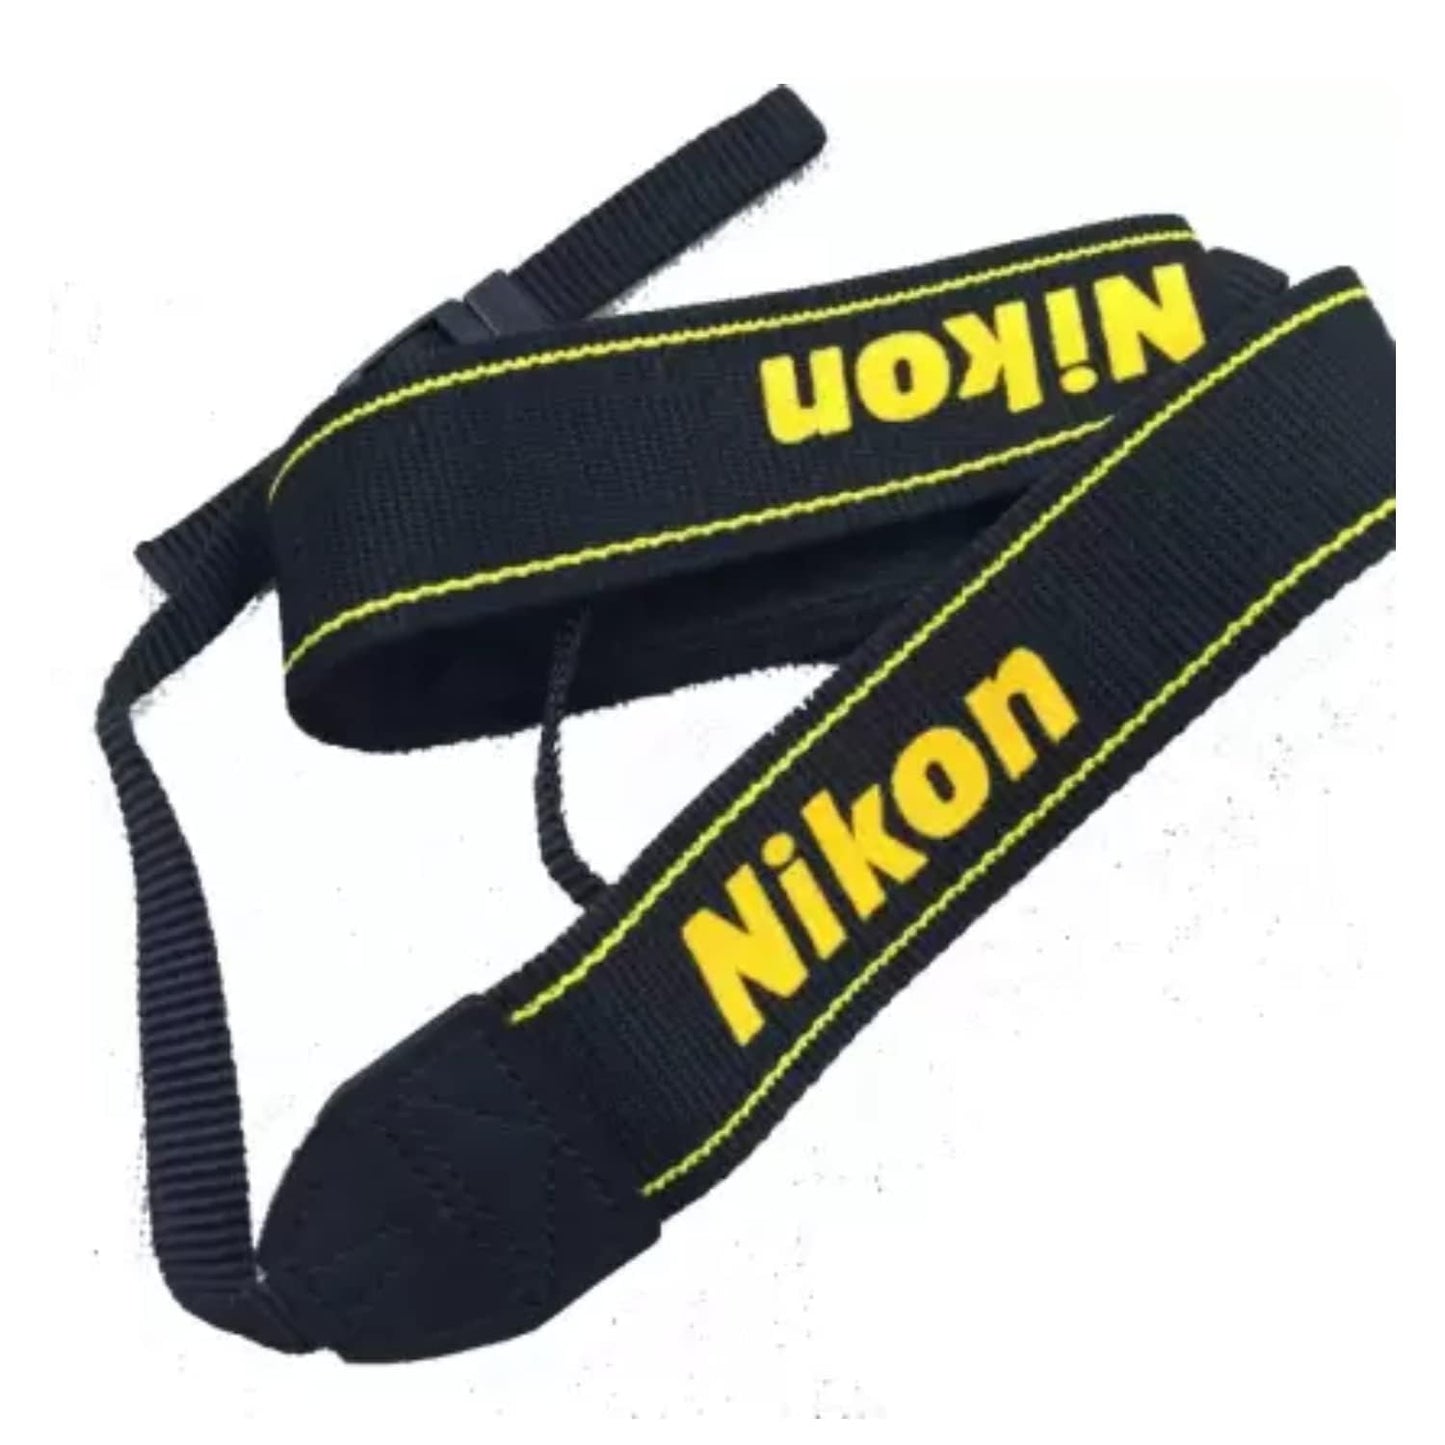 EYUVAA Nikon Camera Belt Digital DSLR Camera Shoulder Neck Strap for Nikon with Microfiber cloth